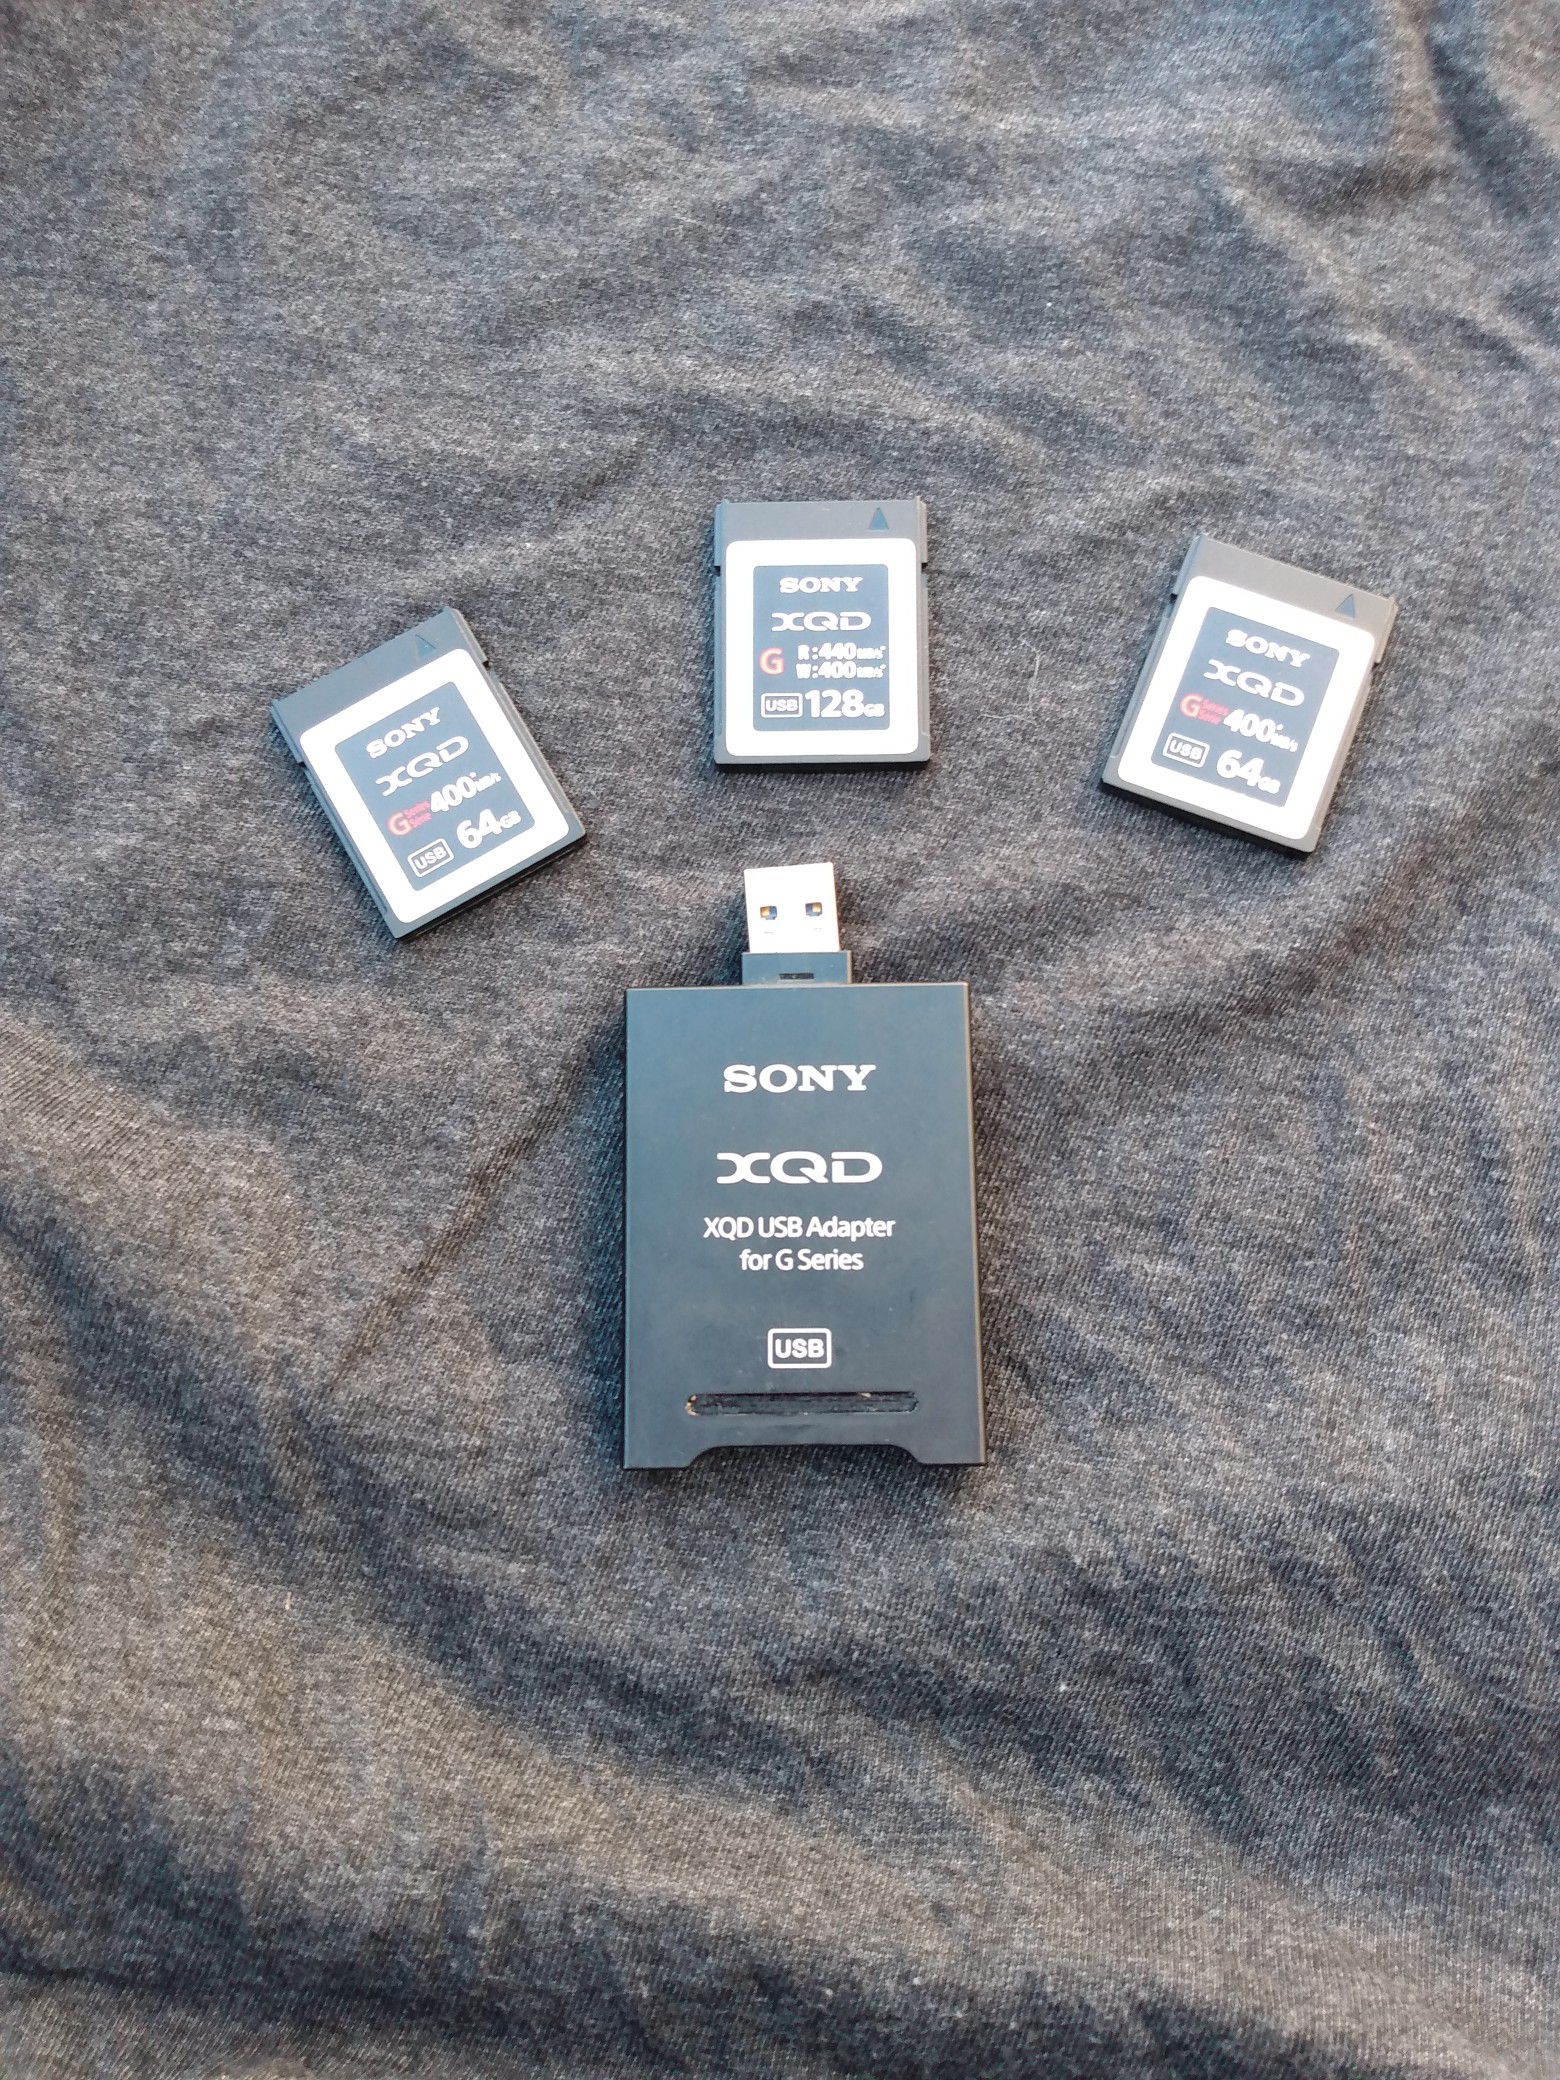 Sony XQD G series SD cards